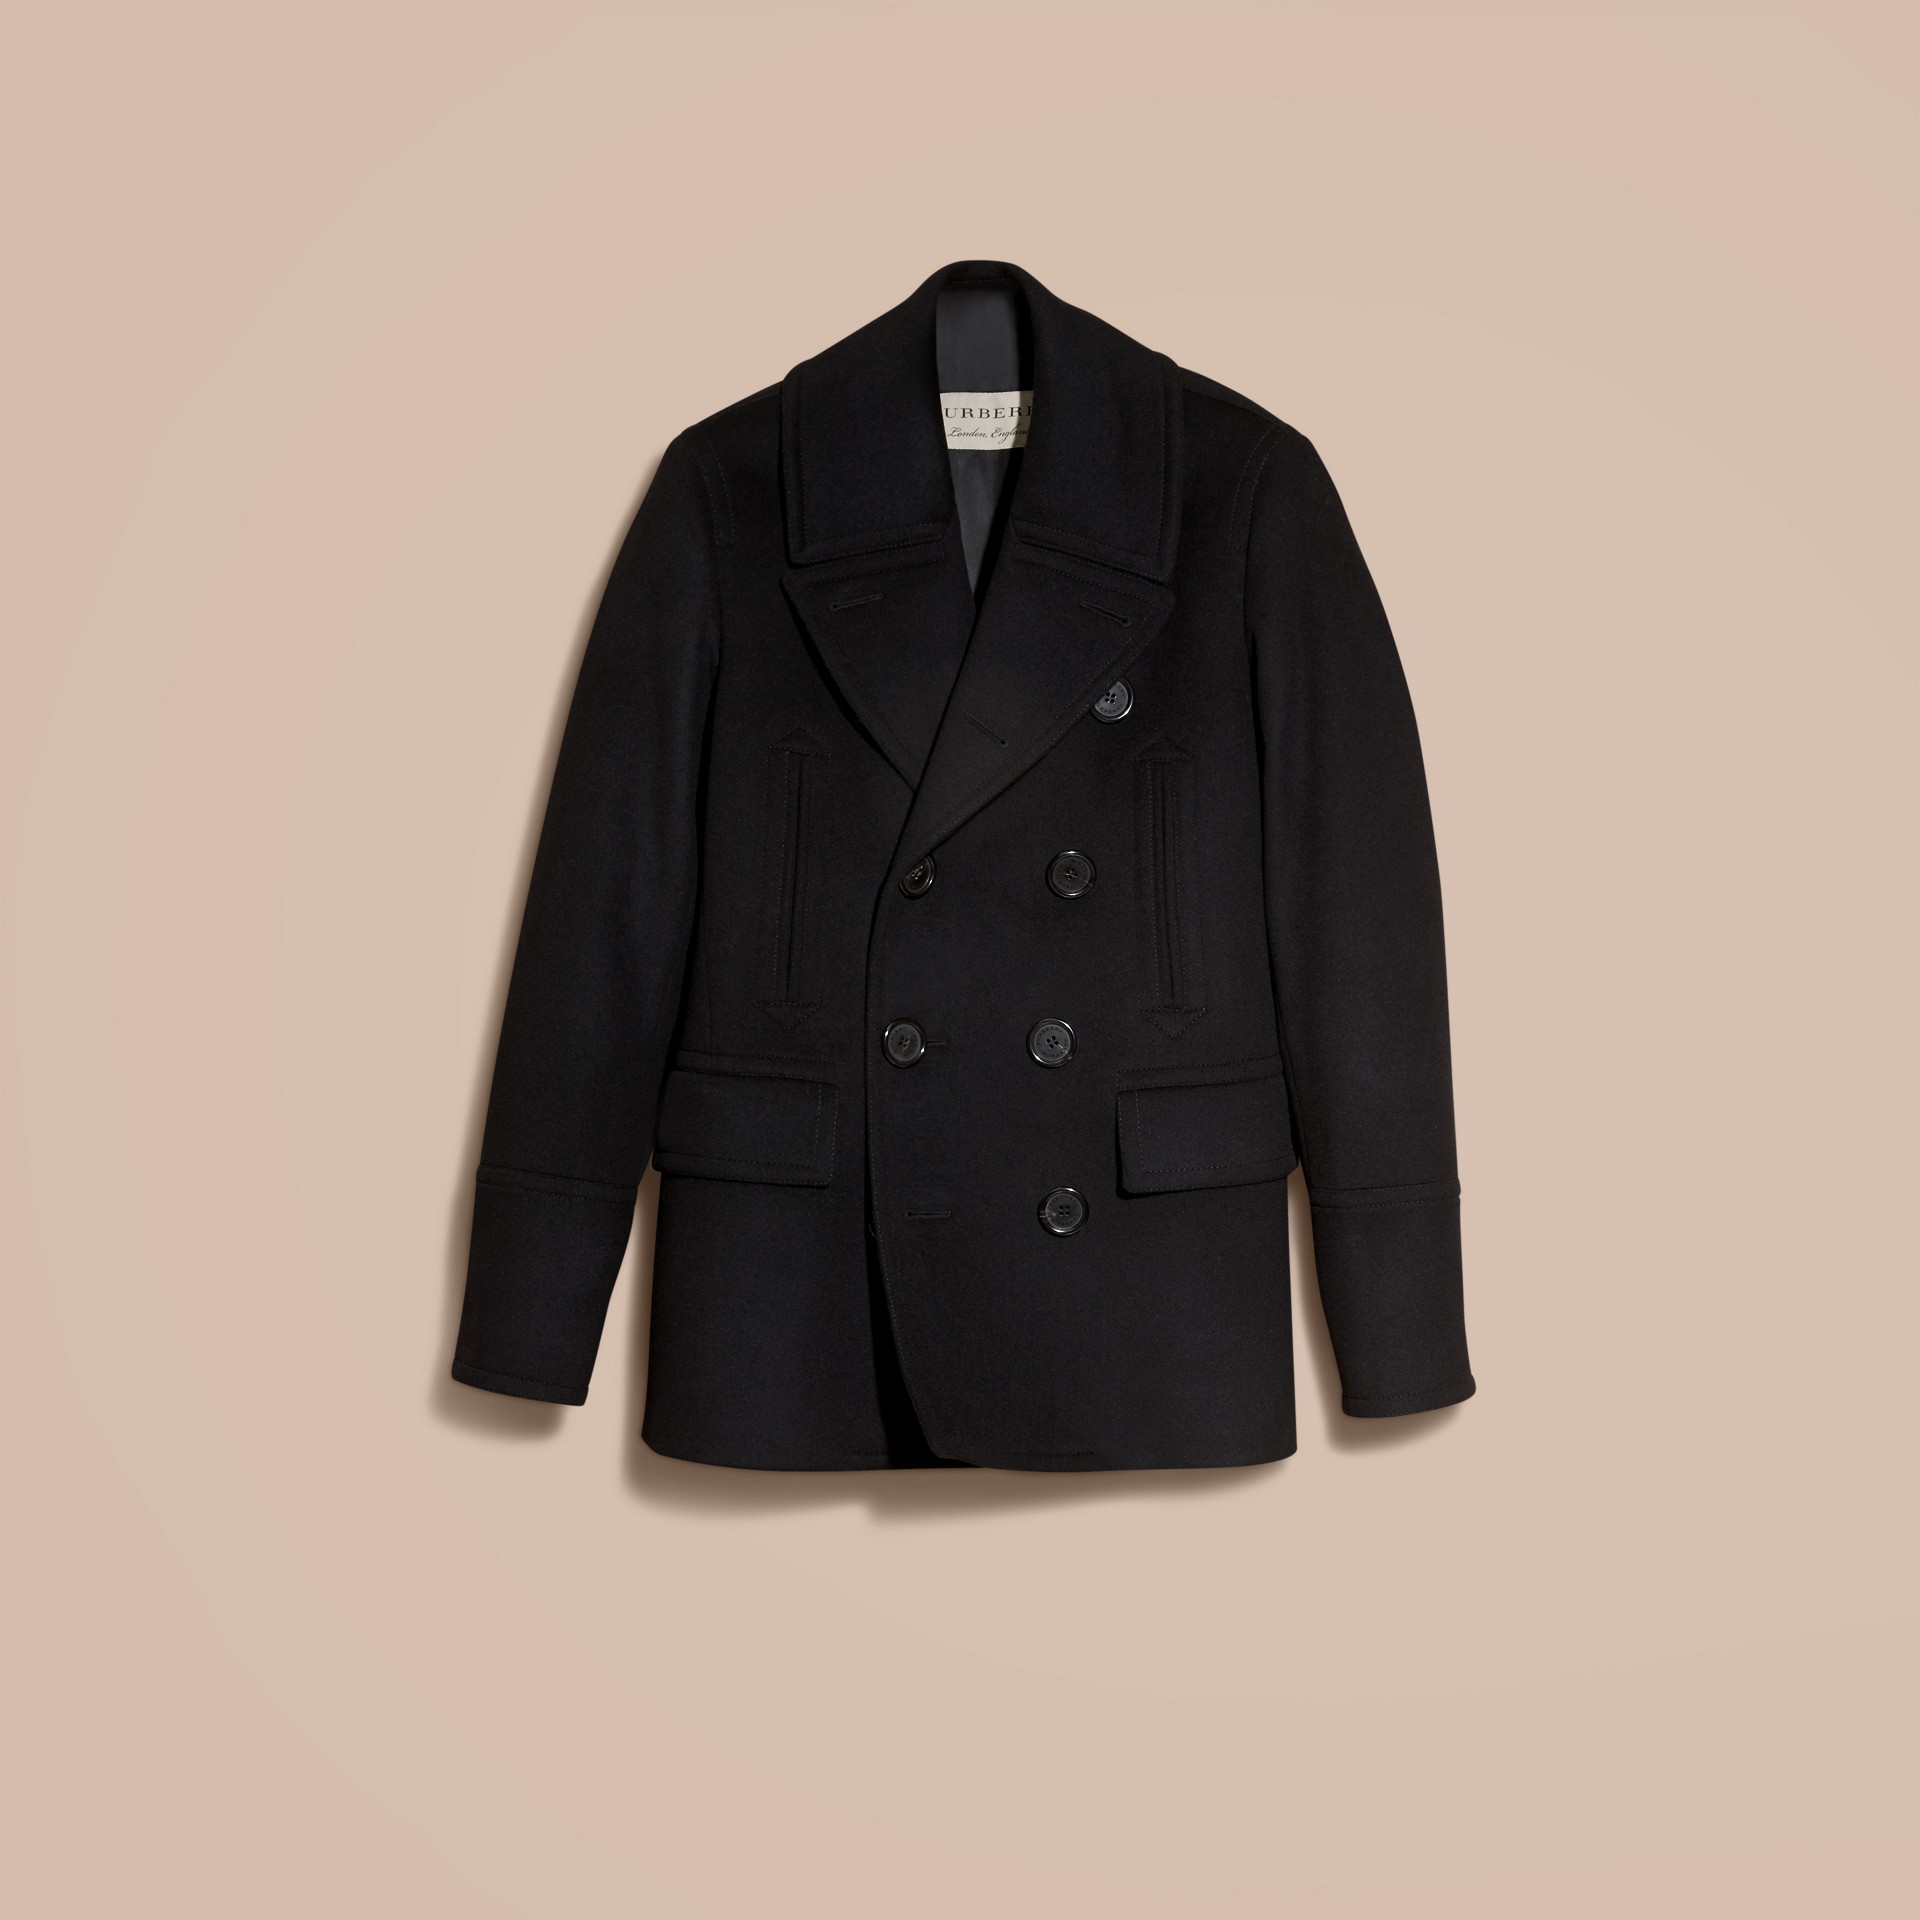 Wool Cashmere Pea Coat in Black - Men | Burberry